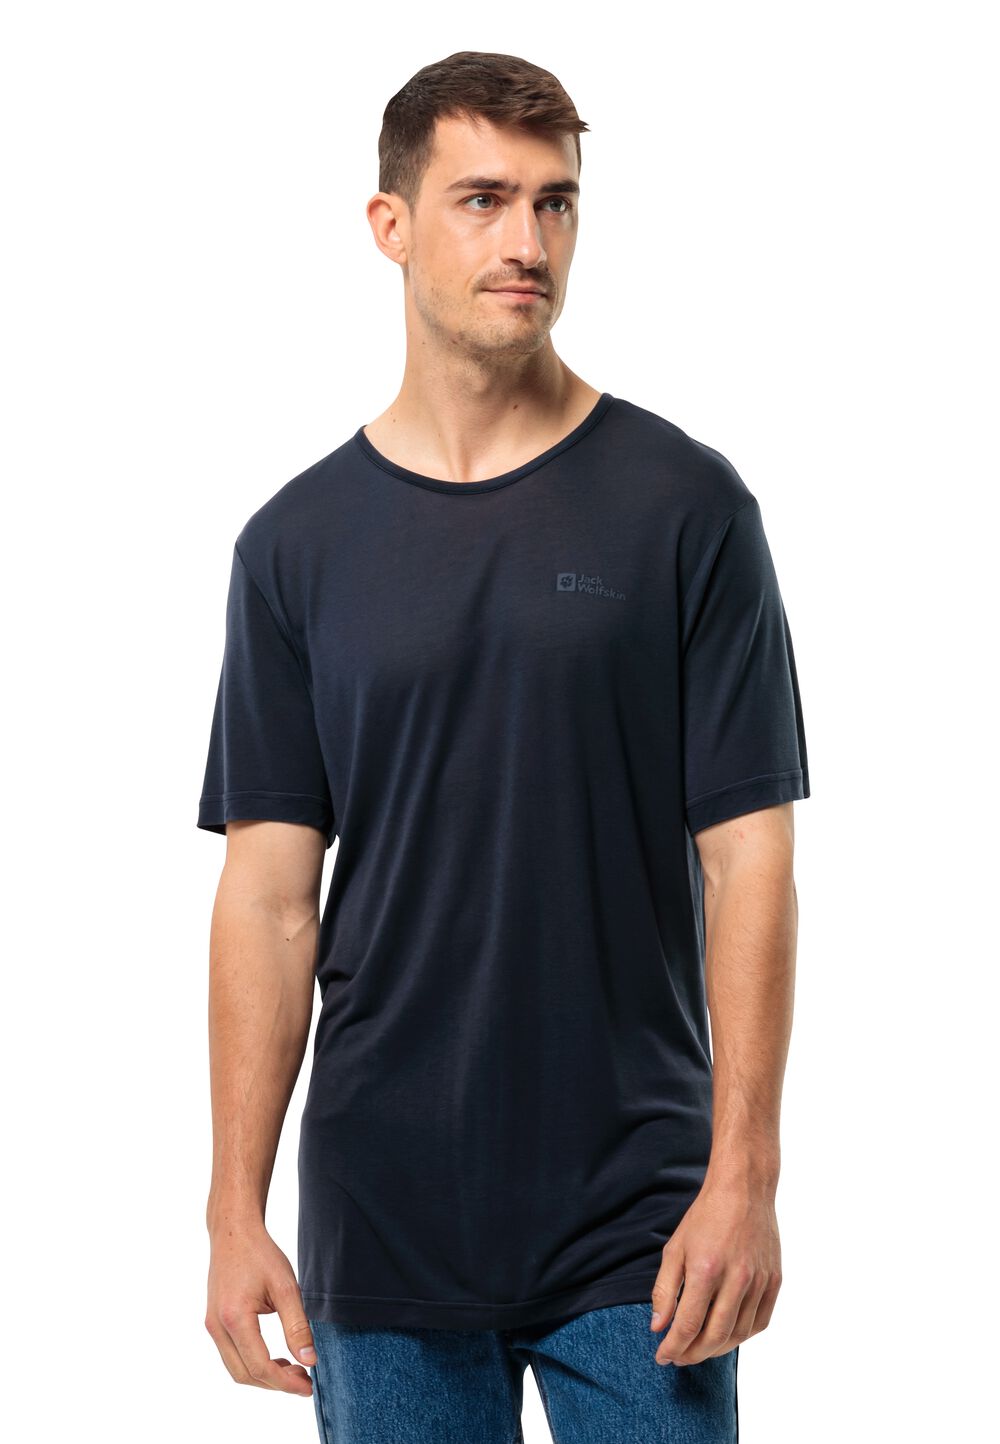 Jack Wolfskin Mola T-Shirt Men Functioneel shirt Heren XXL blue night blue